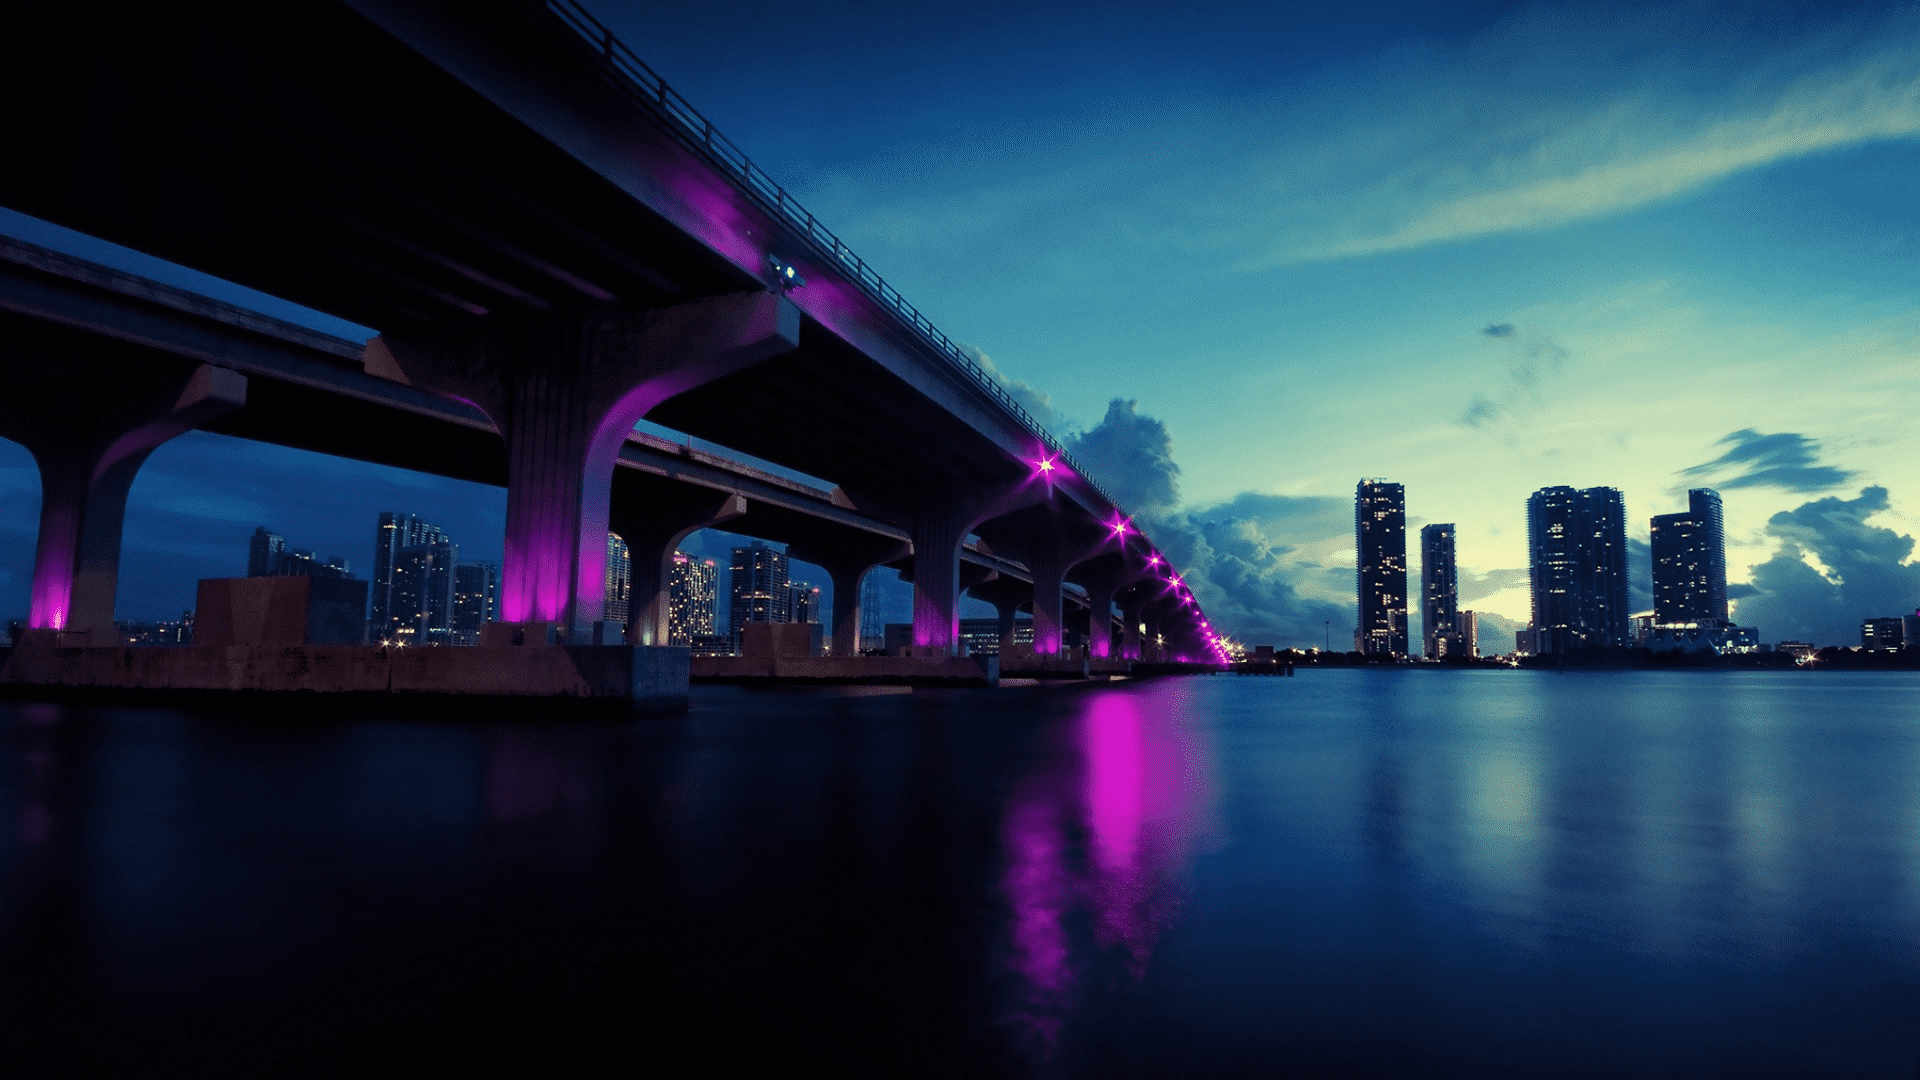 Miami Wallpaper: The City Skyline Across The Beach